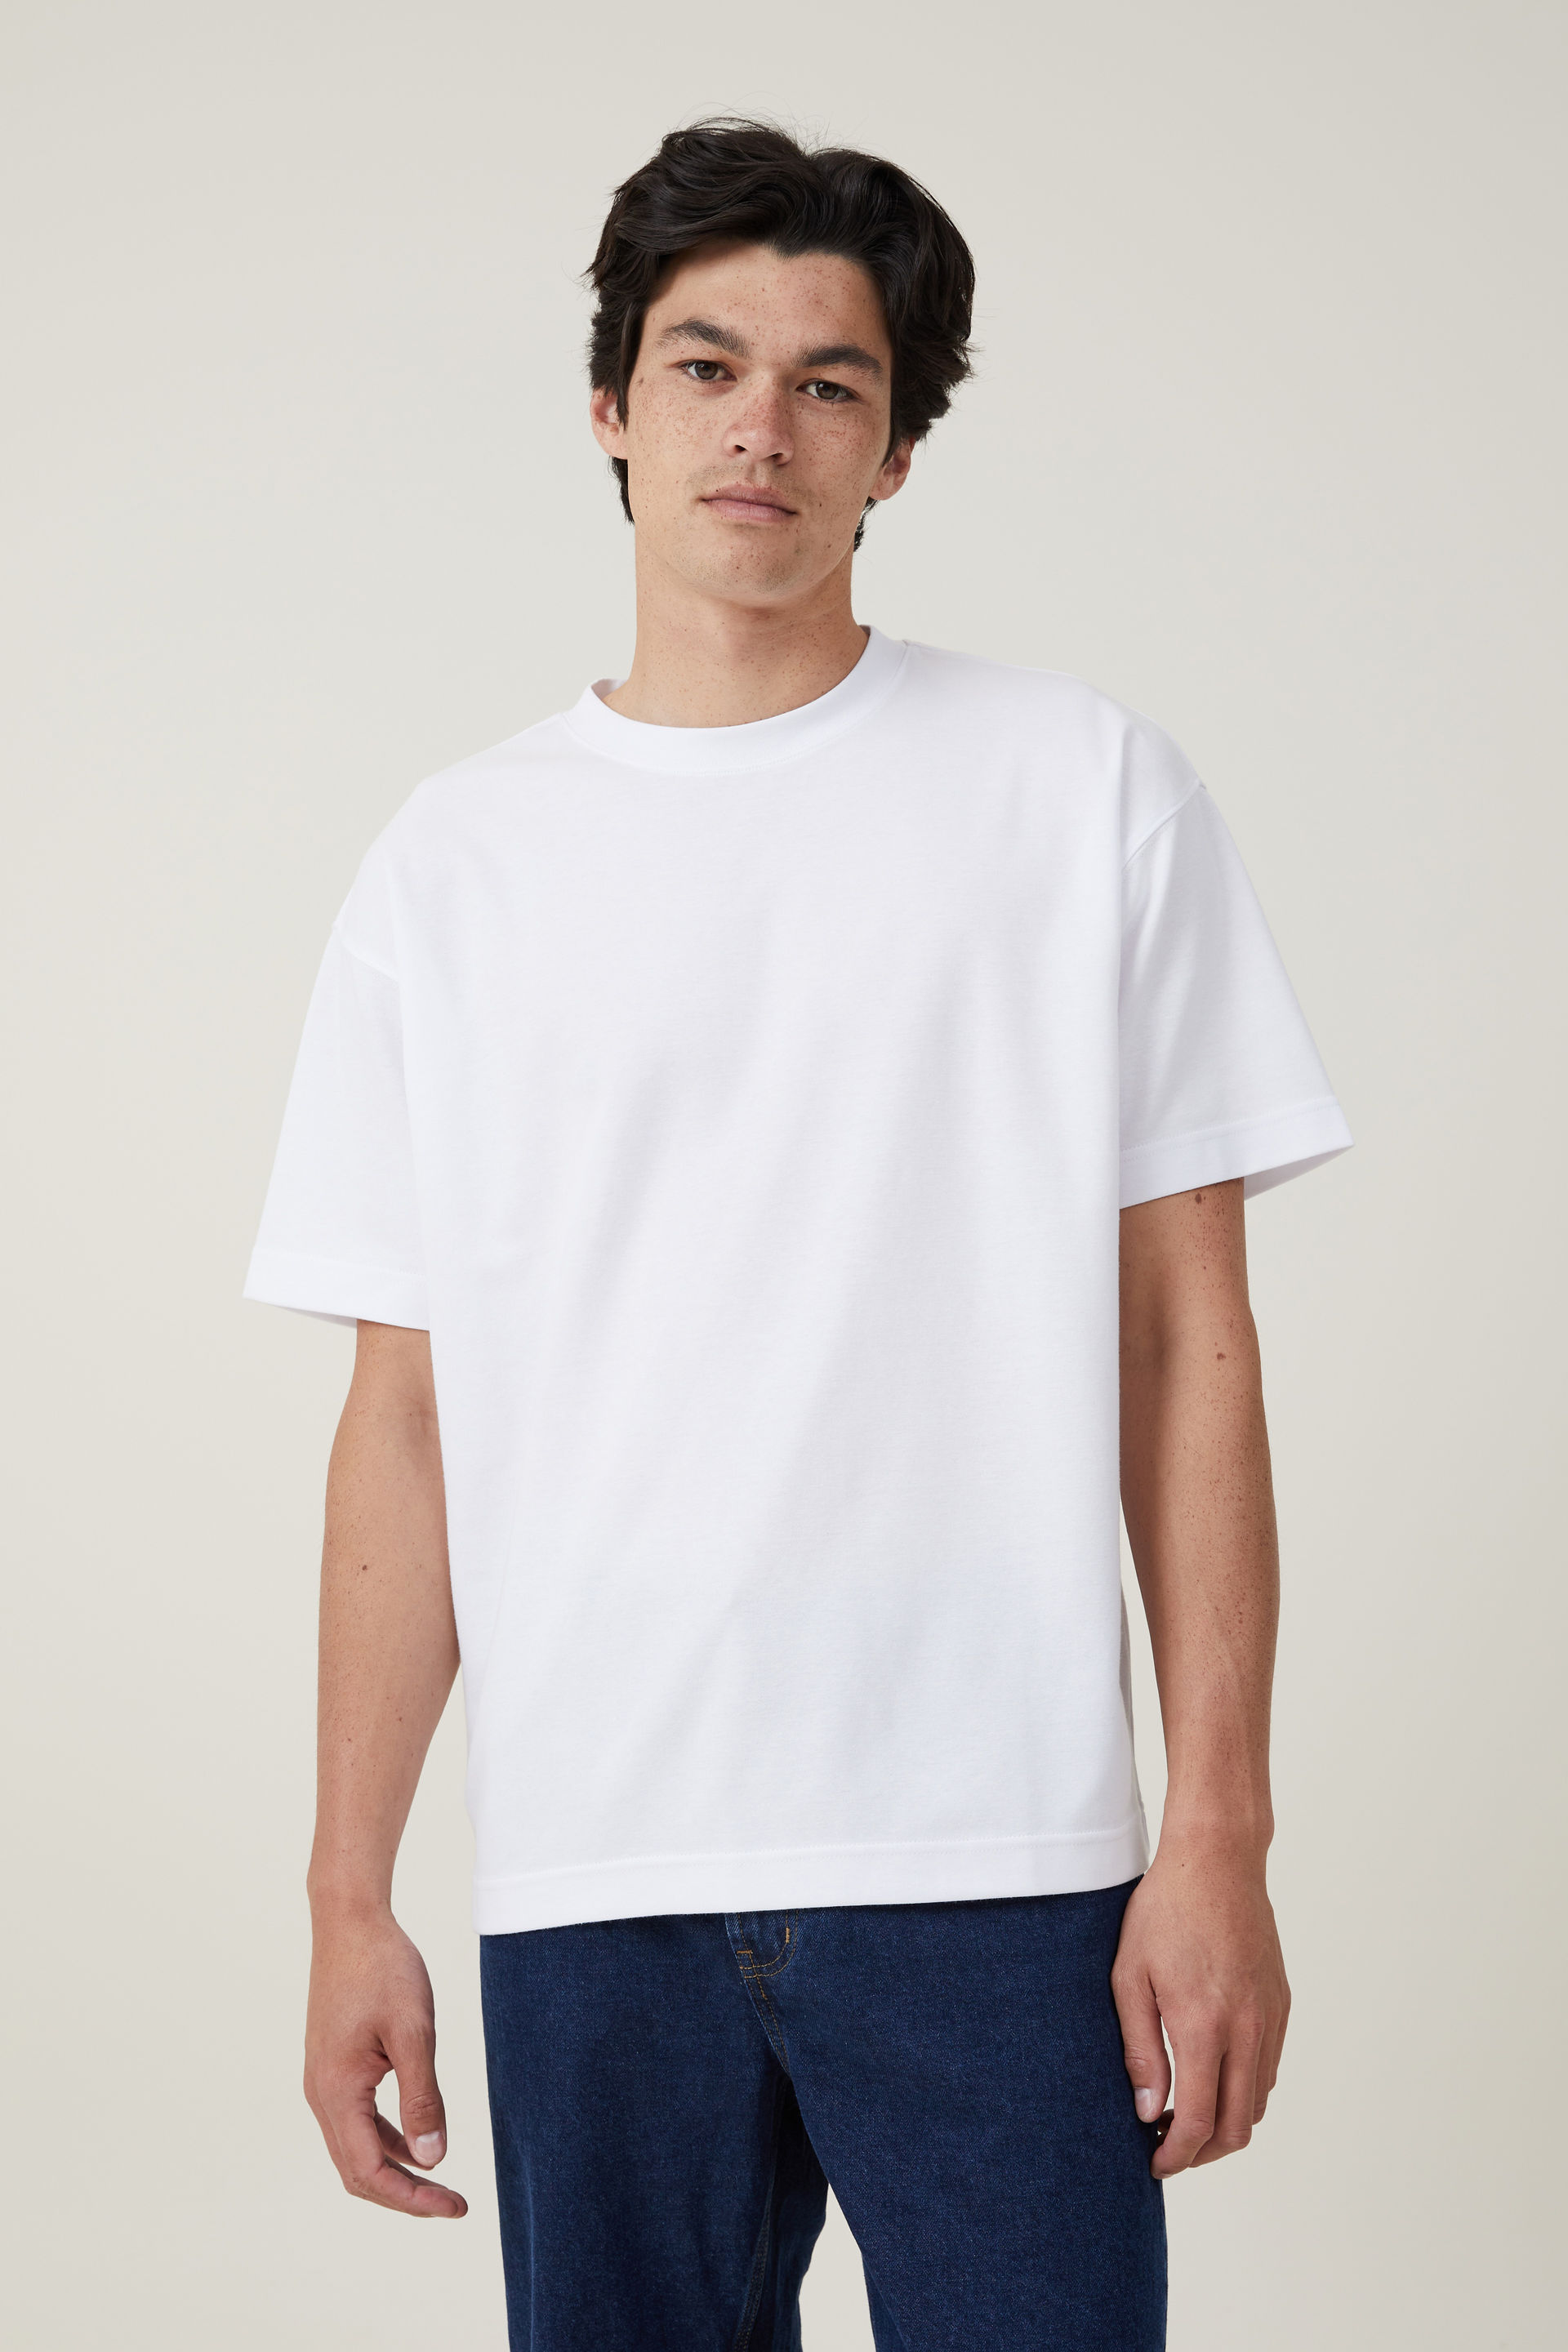 Cotton On Men - Hyperweave T-Shirt - White